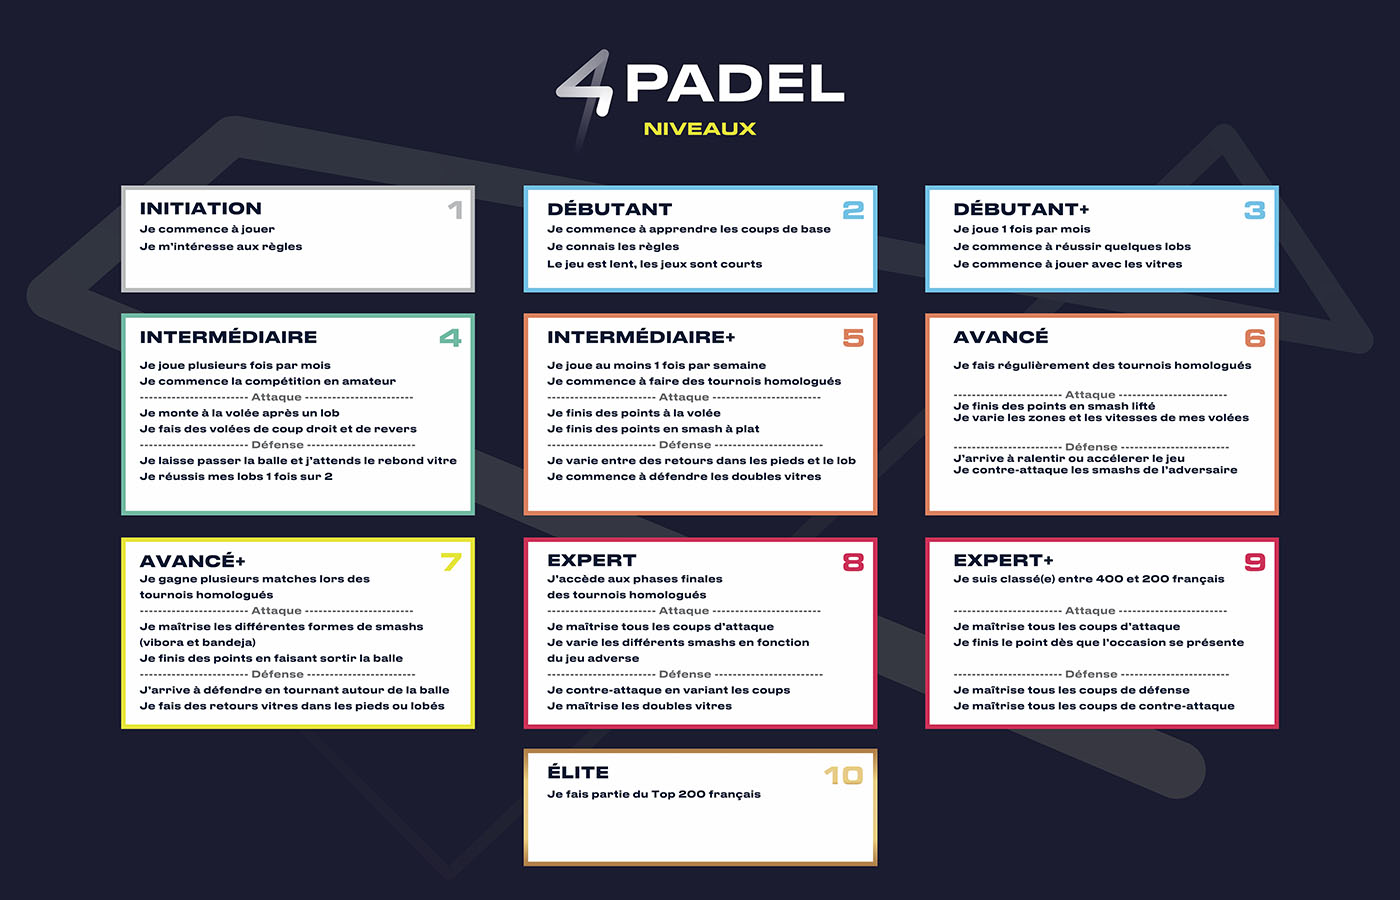 4PADEL News palaa tasotasoon Padel Noin